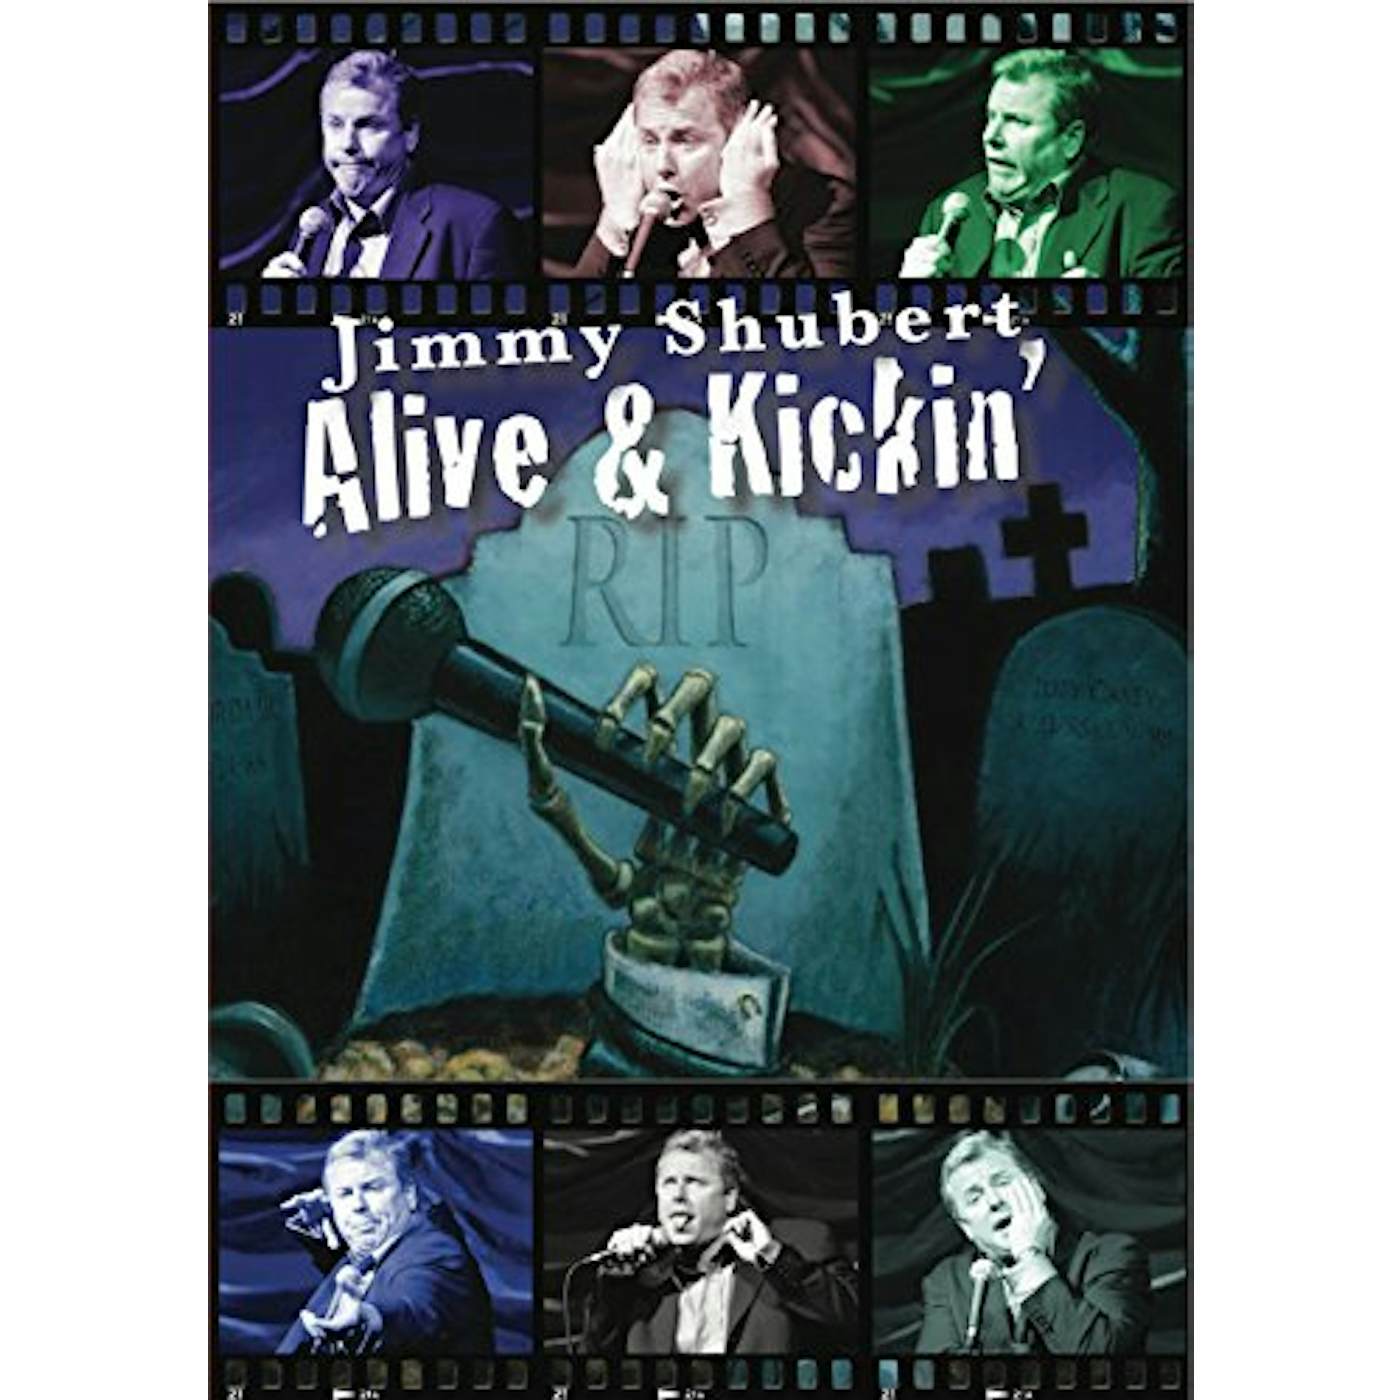 Jimmy Shubert ALIVE & KICKIN' DVD